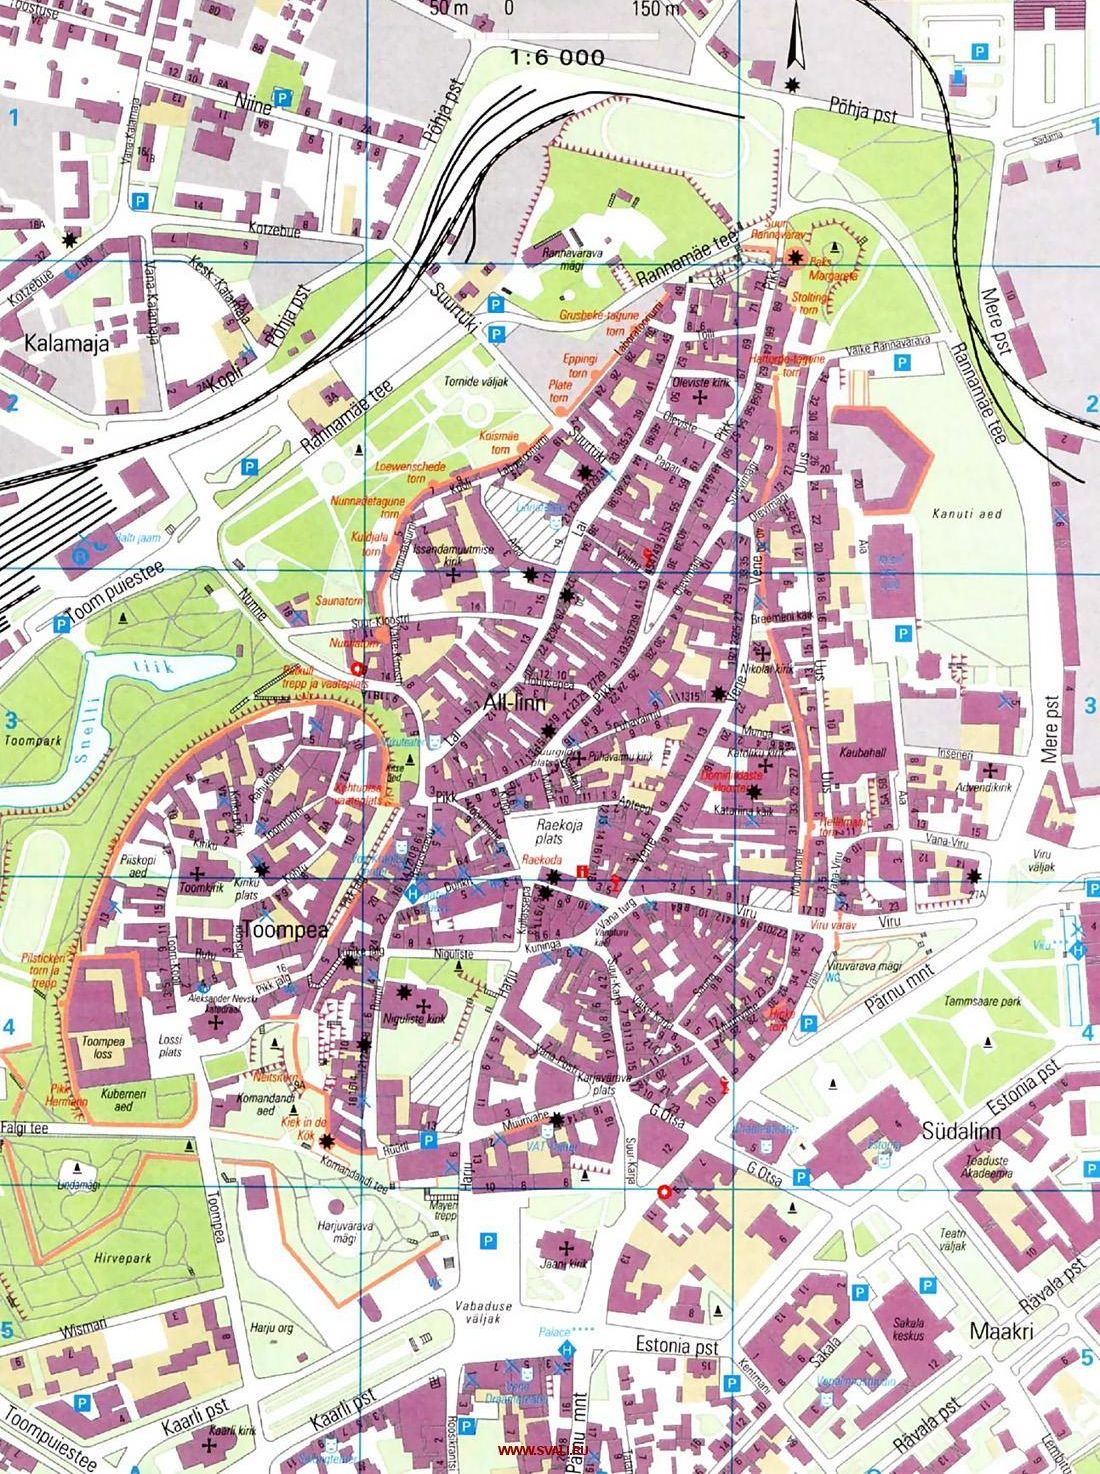 Map of central part of Tallinn